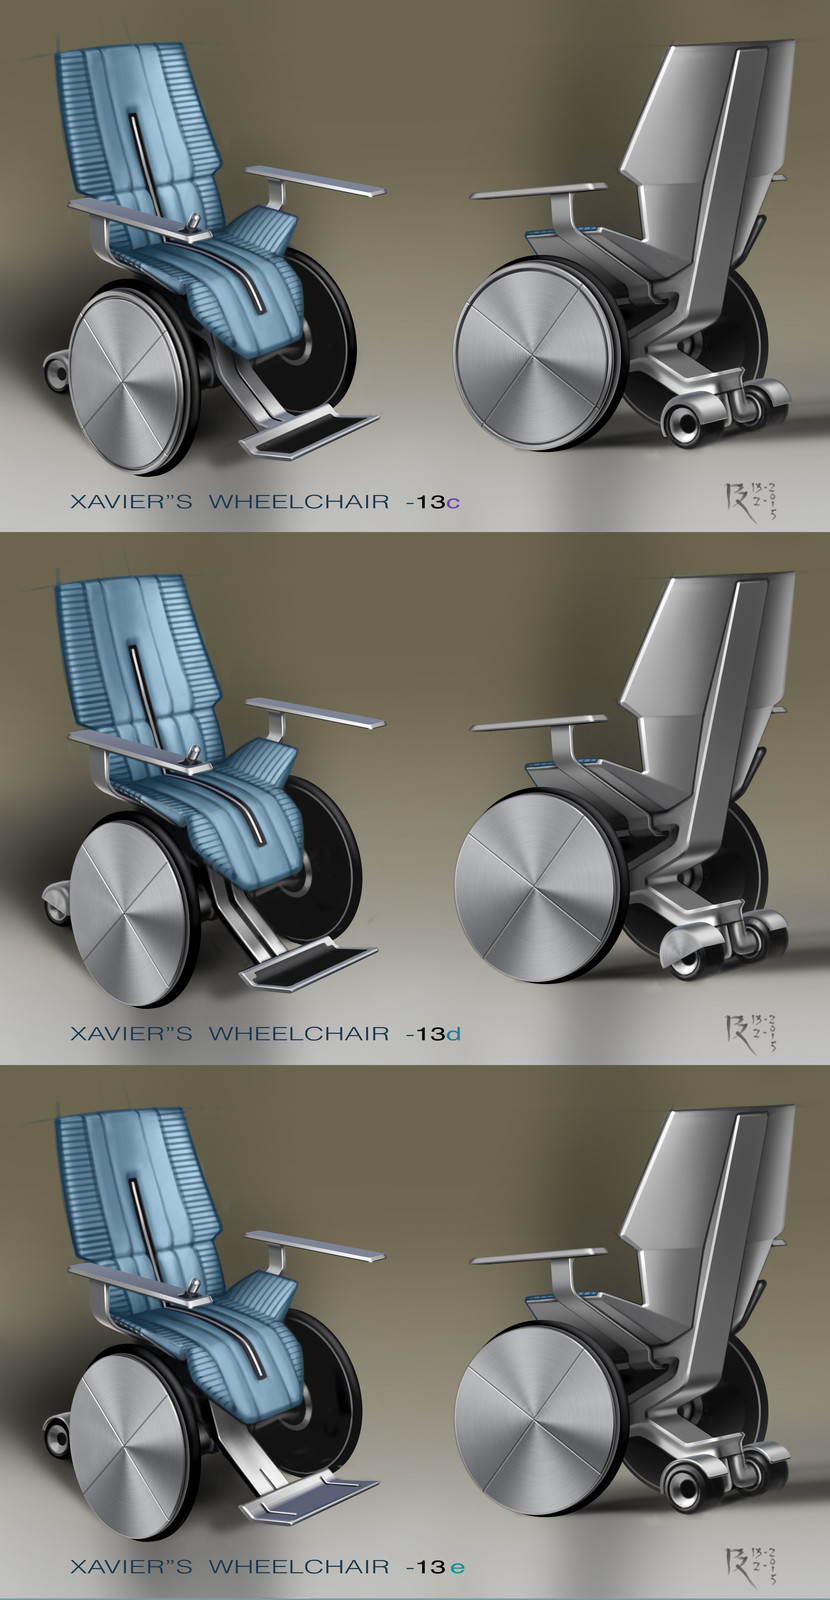 Xavier's Wheelchair -variations